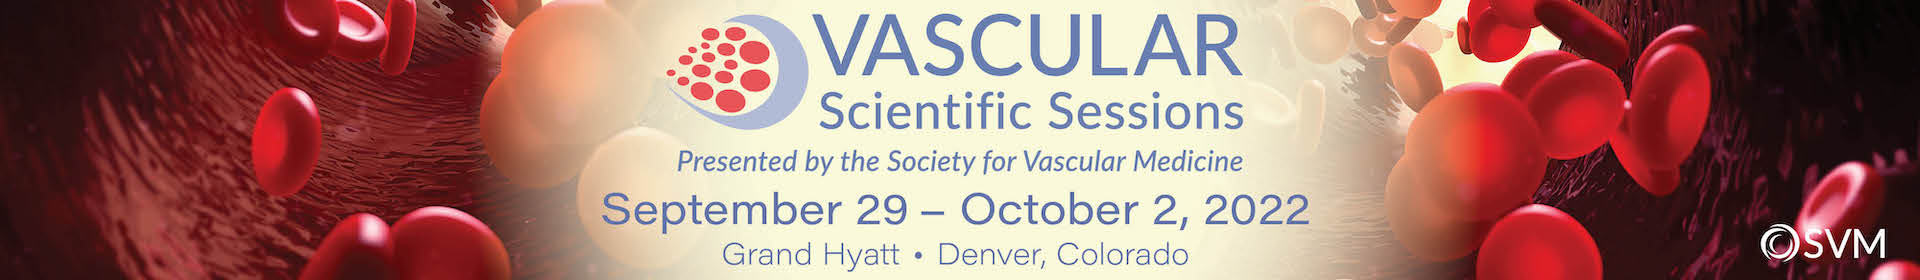 SVM 2022 Vascular Scientific Sessions Event Banner